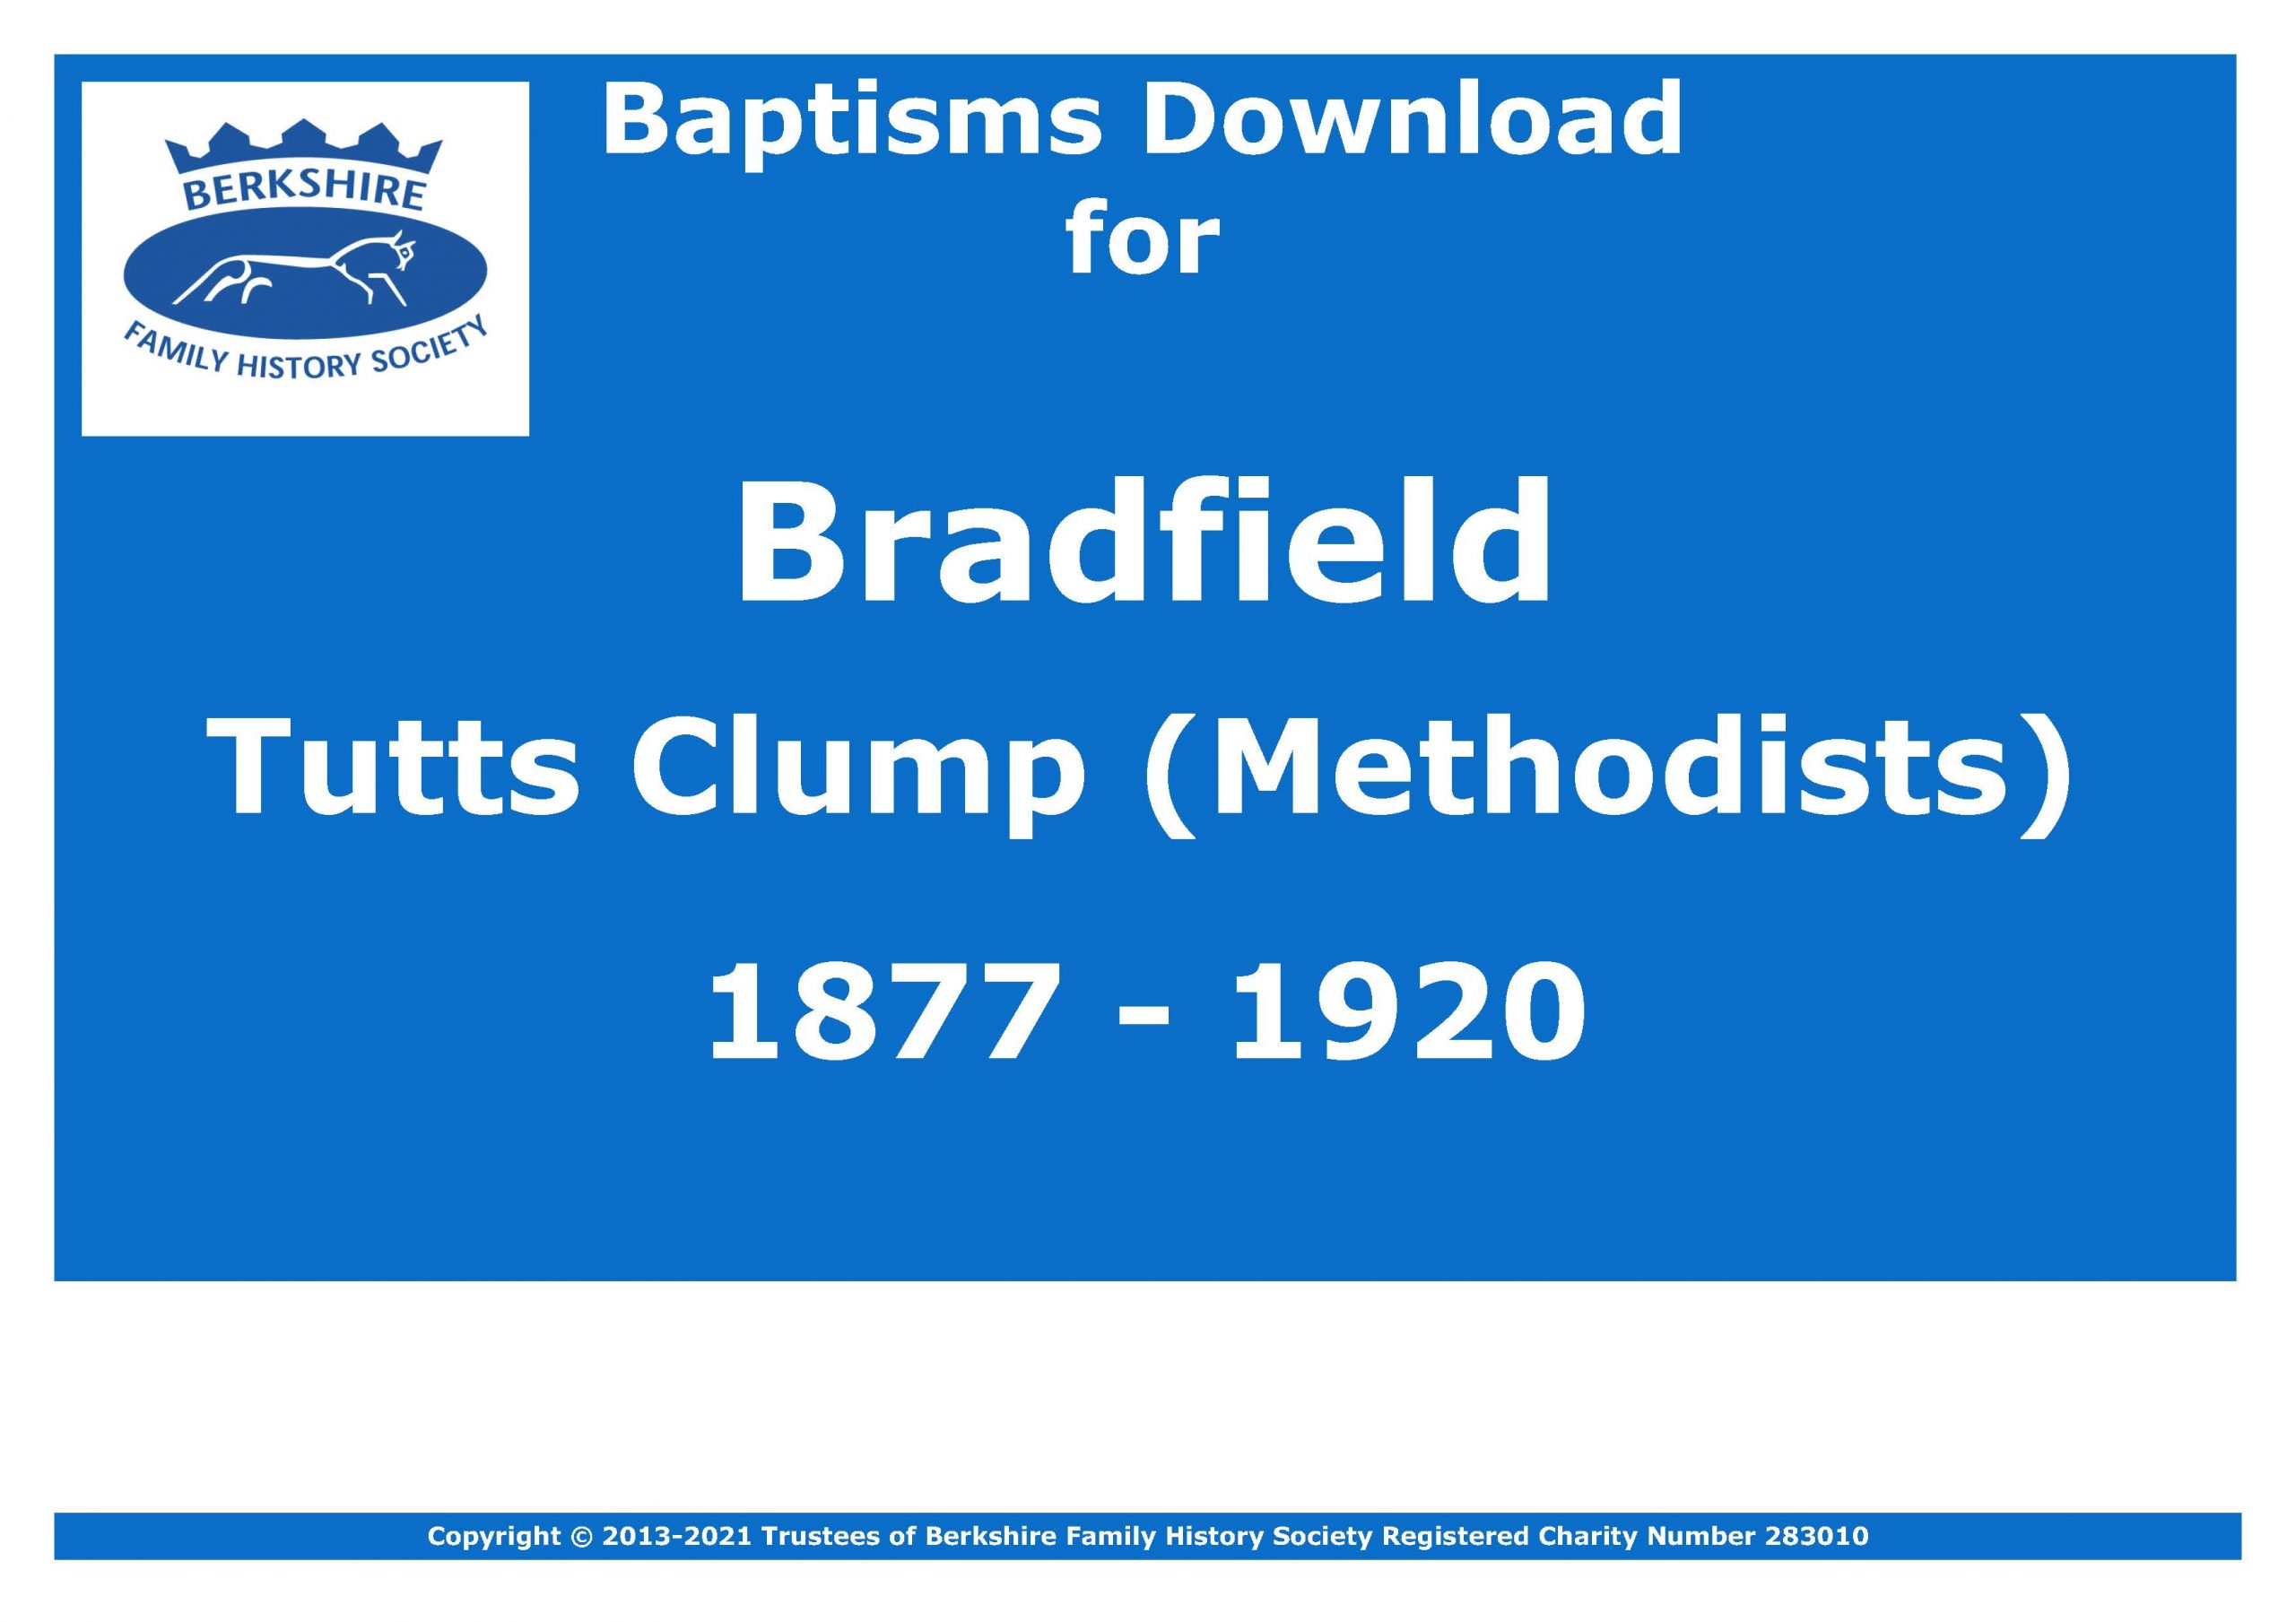 Bradfield Tutts Clump Methodists Baptisms 1877-1920 (Download) D1601